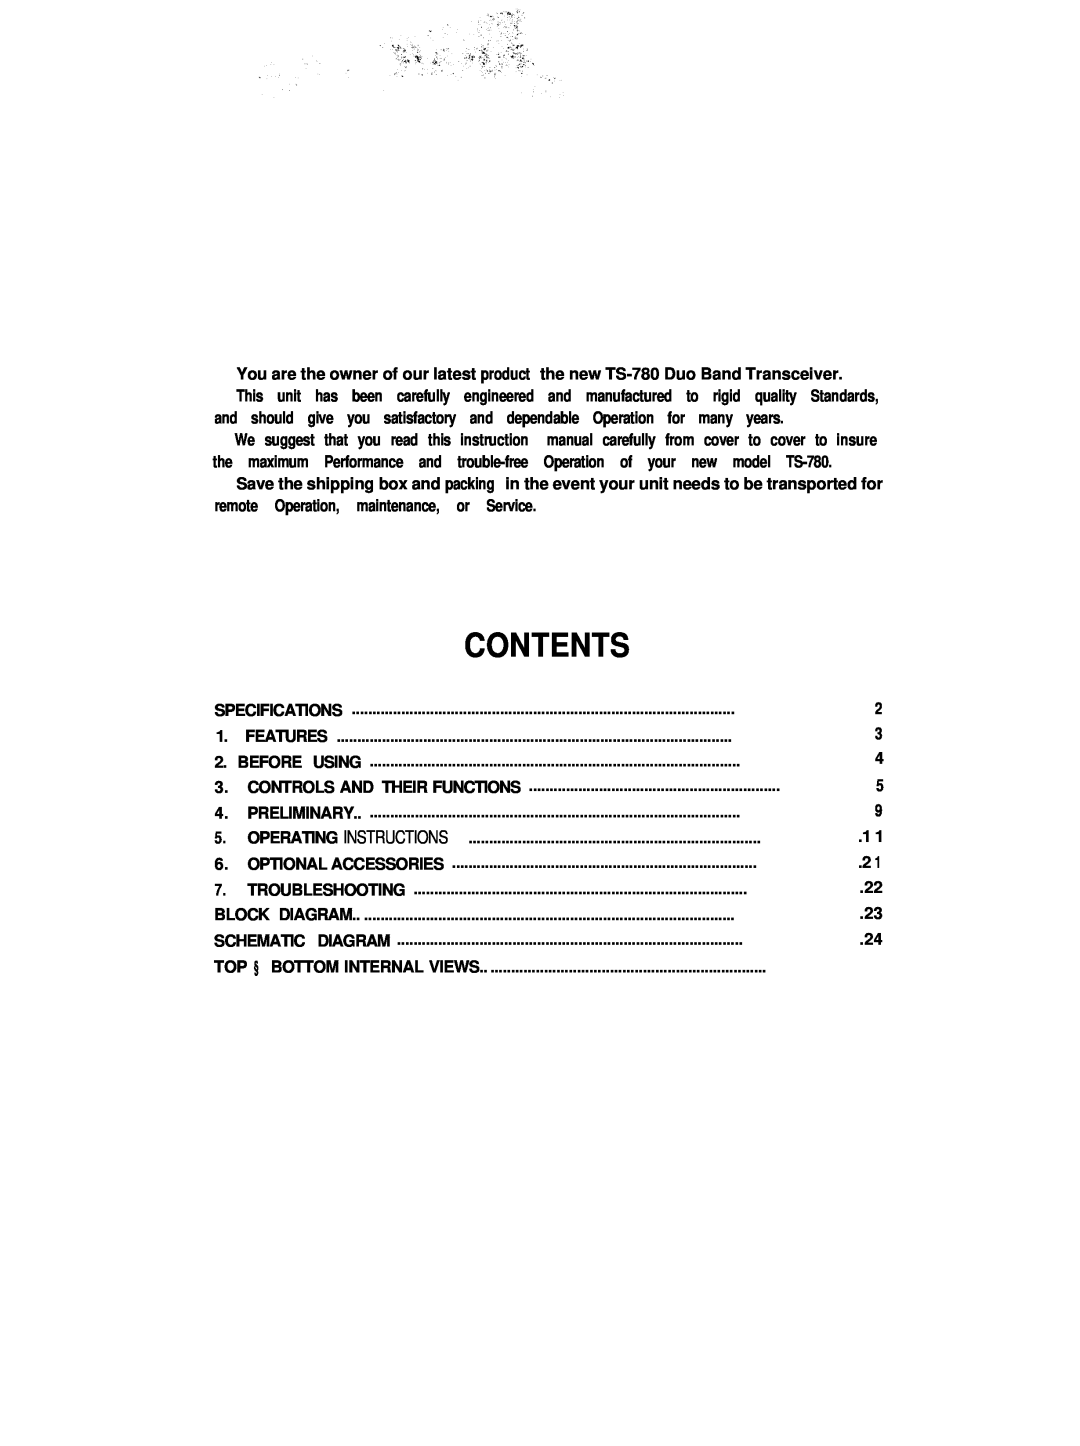 Kenwood TS-780 manual Contents 